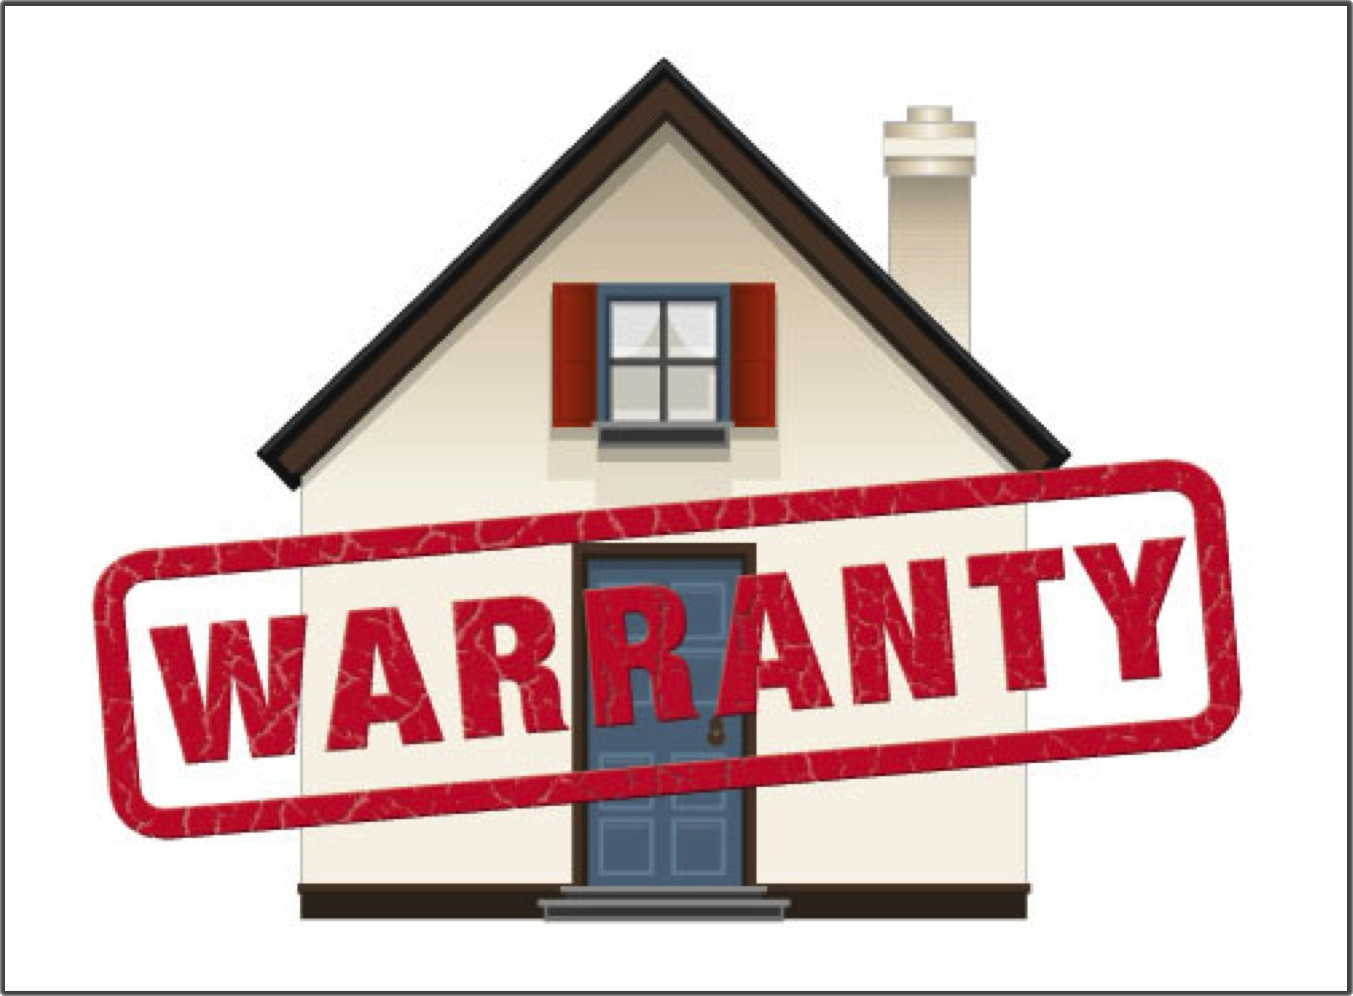 Appliance Insurance Choice Home Warranty